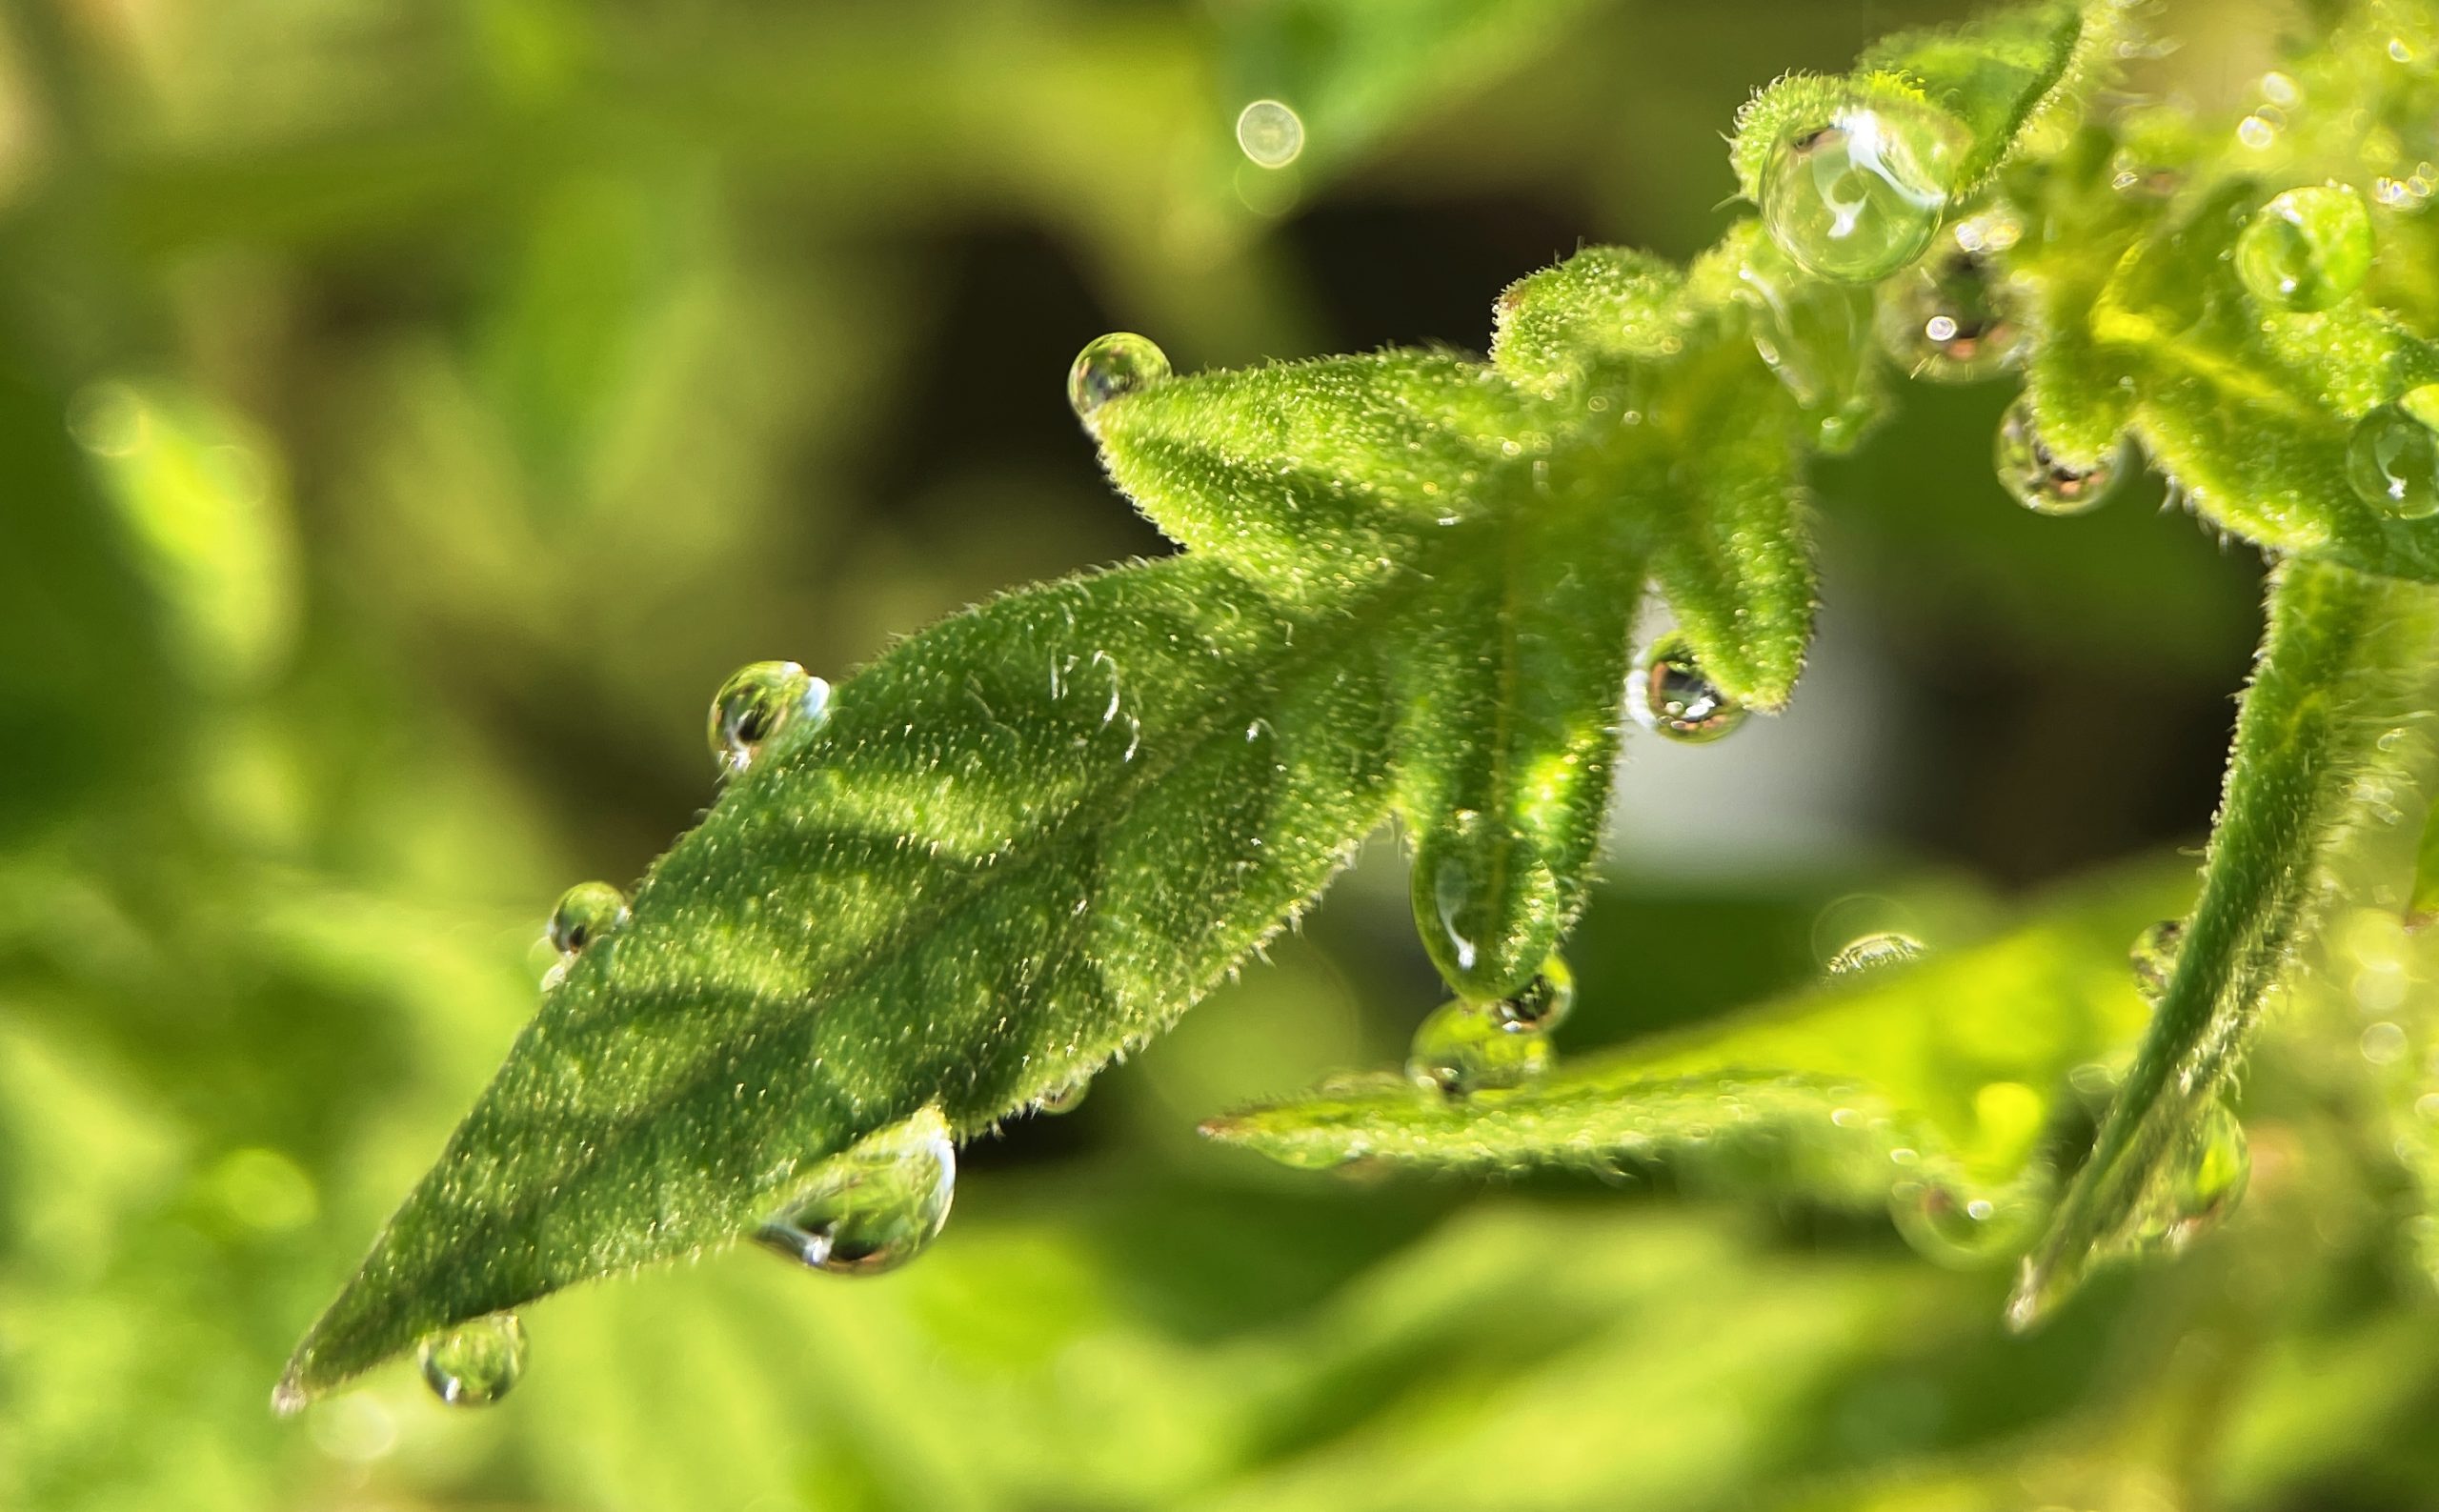 Dew on a tomato leaf